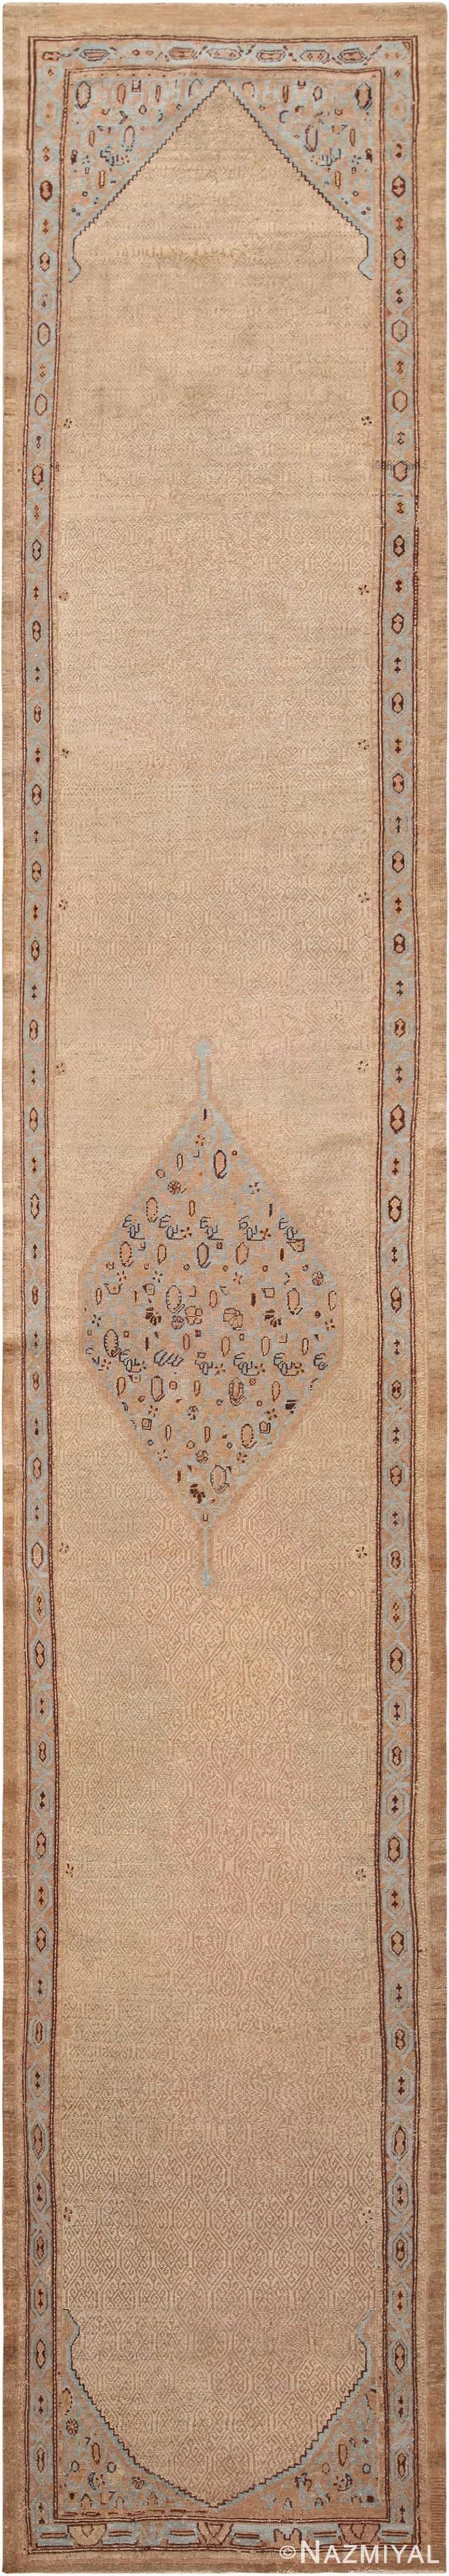 Antique Persian Serab Runner Rug 71463 by Nazmiyal Antique Rugs